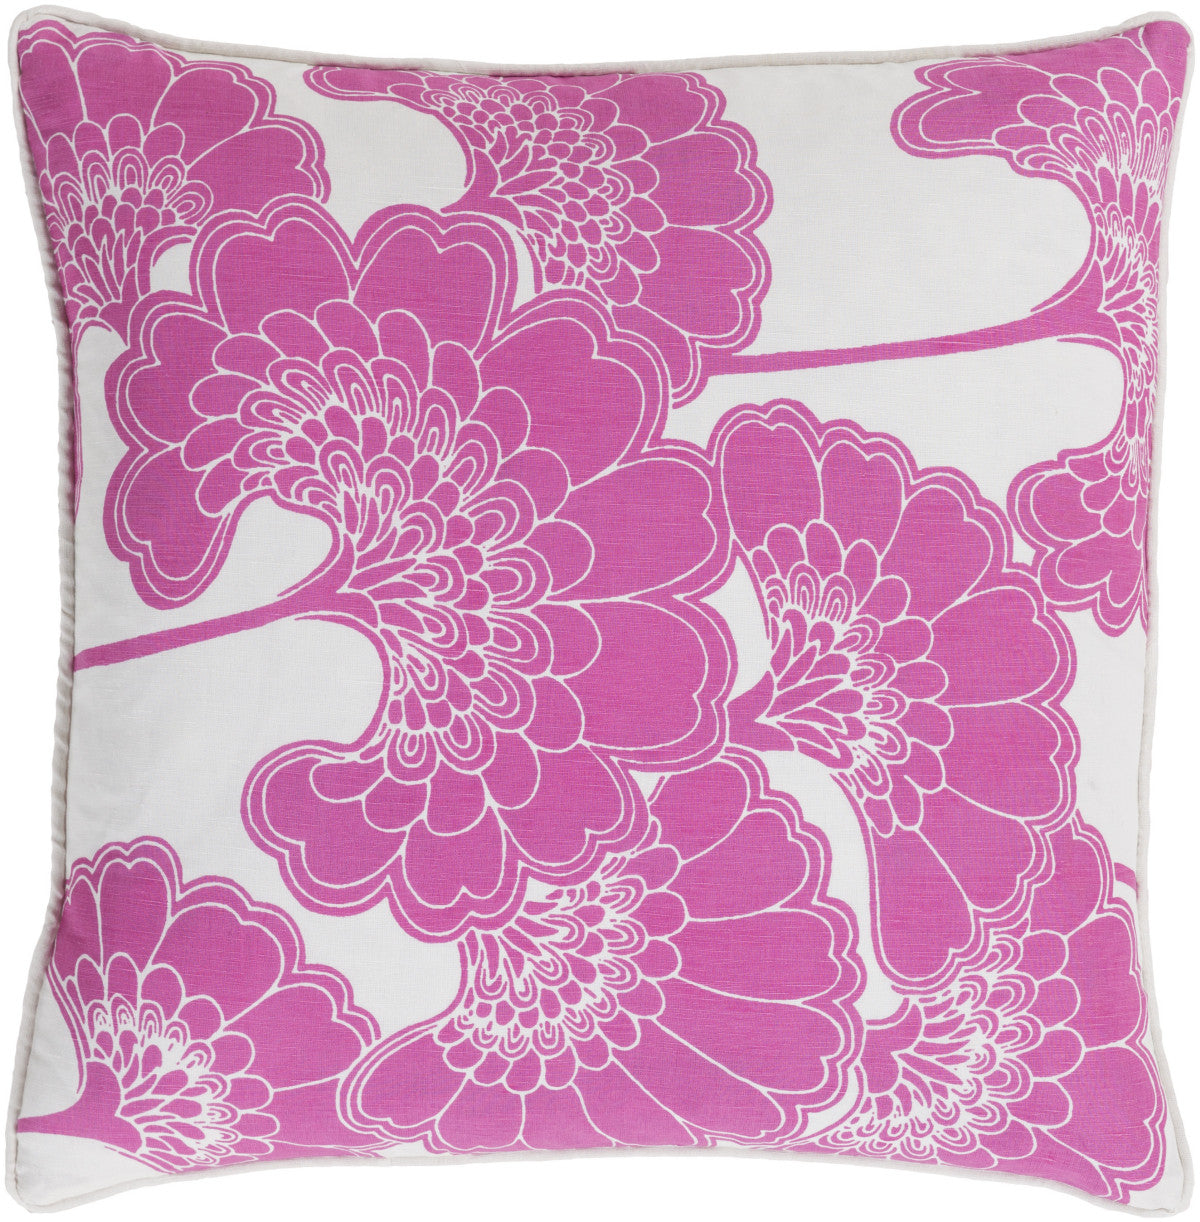 Surya Japanese Floral JA004 Pillow by Florence Broadhurst